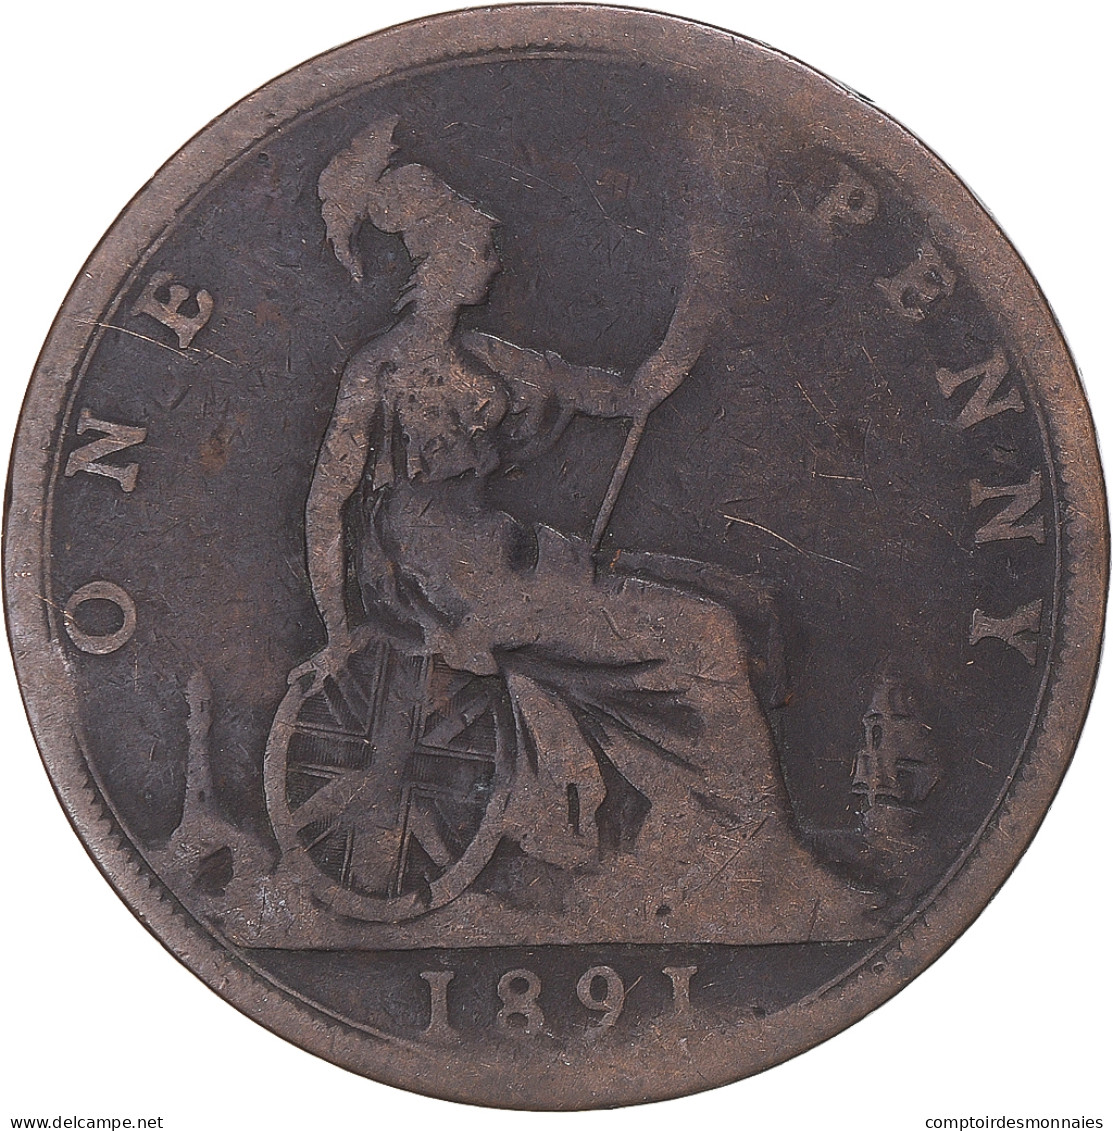 Monnaie, Grande-Bretagne, Penny, 1891 - C. 1/2 Penny